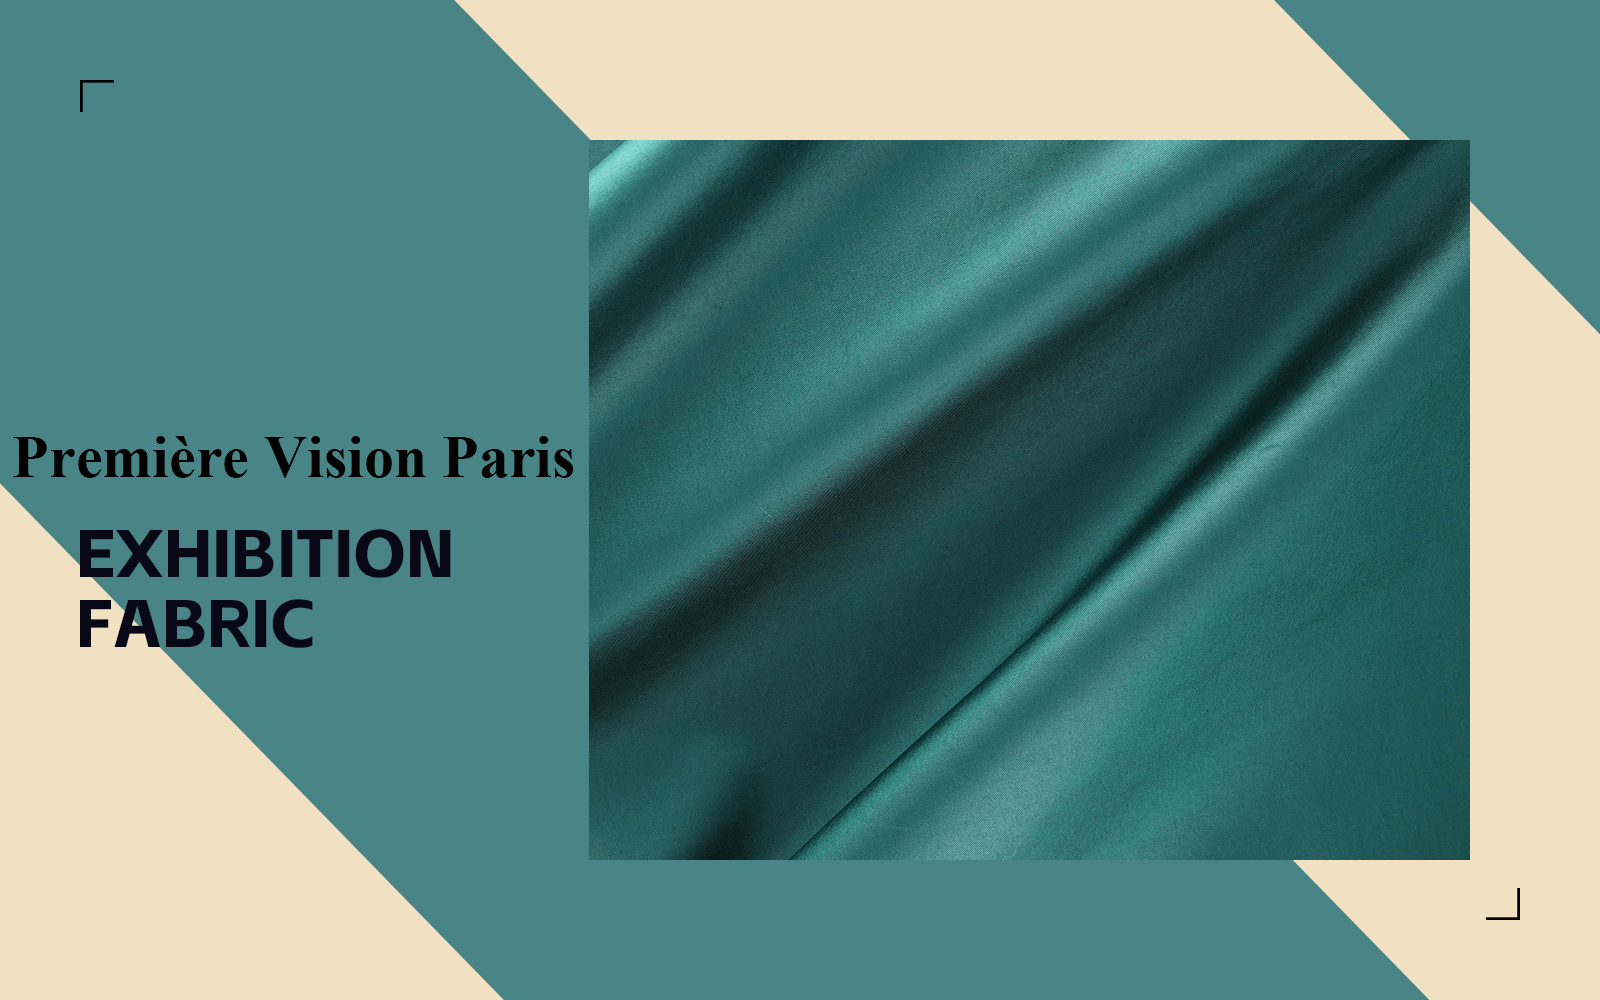 Silk Fabric -- The Exhibition Analysis of Première Vision Paris